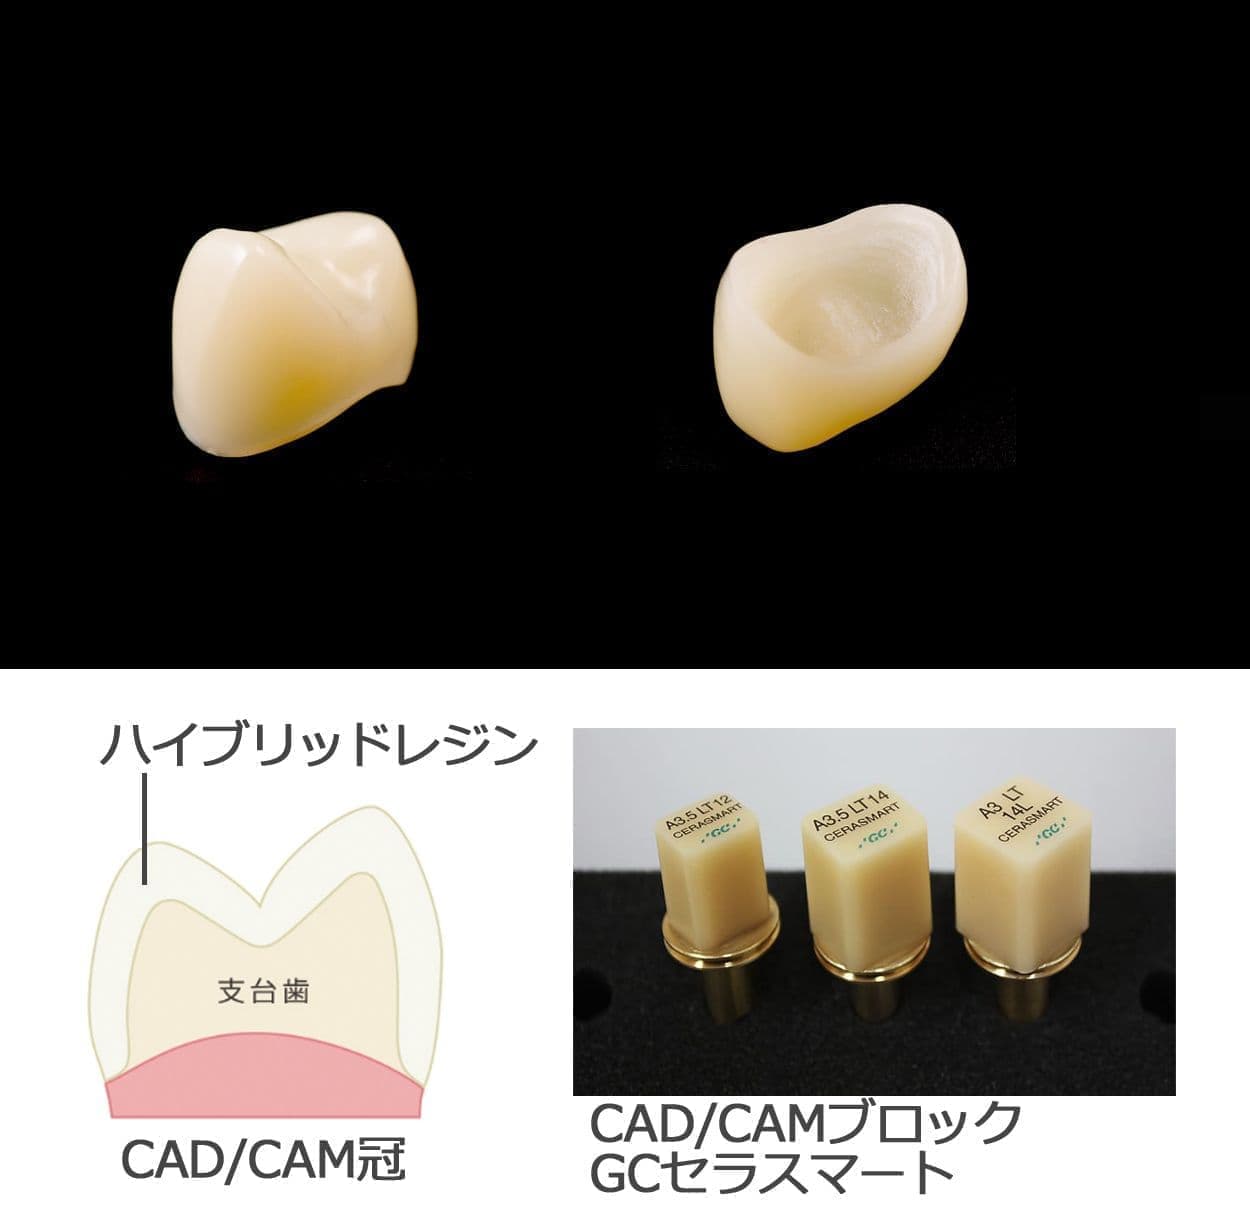 CAD/CAM冠